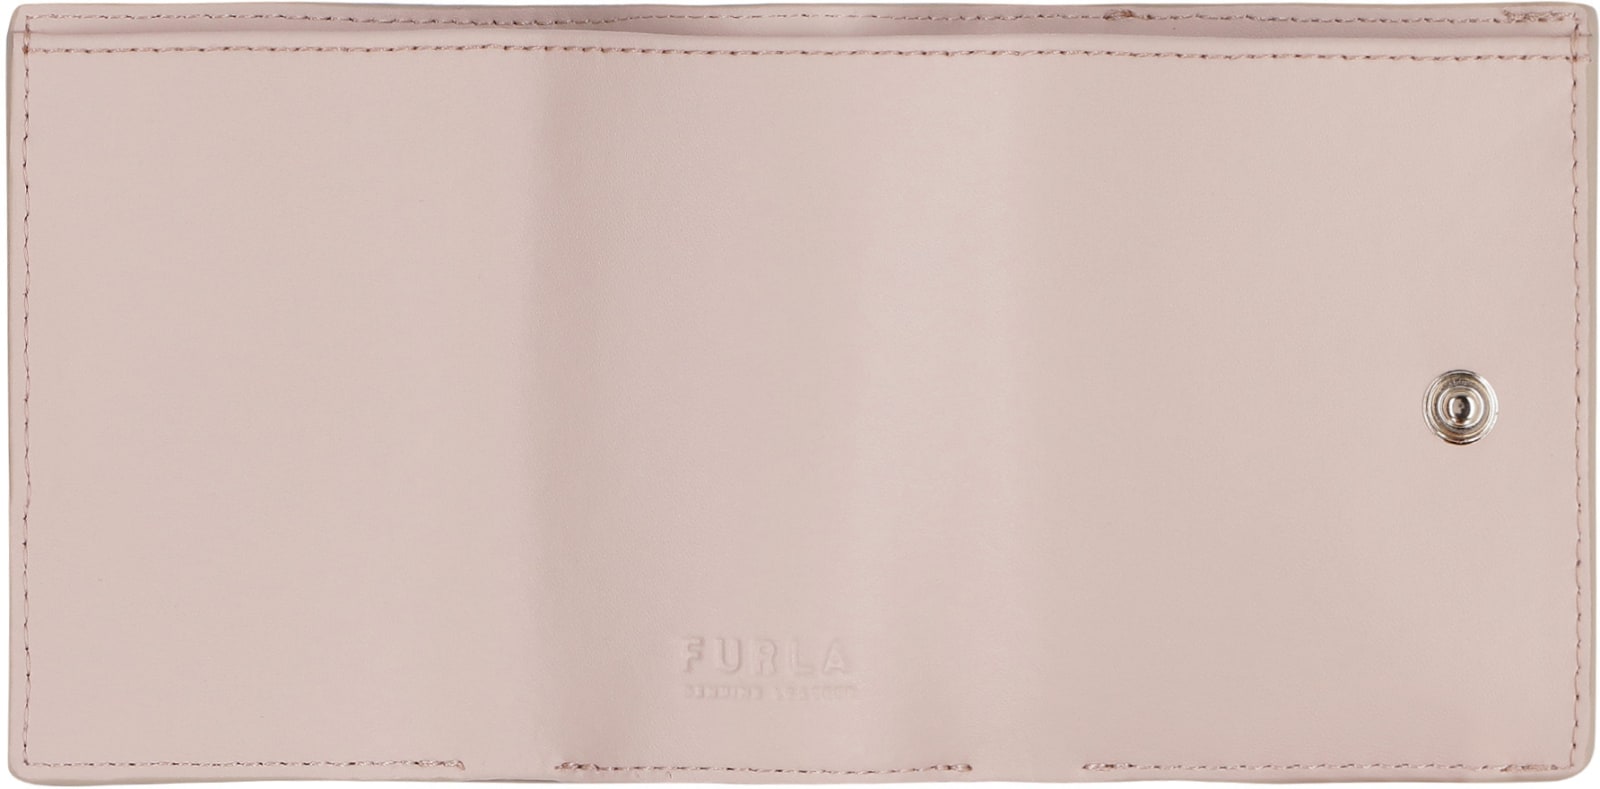 Furla Furla 1927 Small Leather Flap-over Wallet | italist